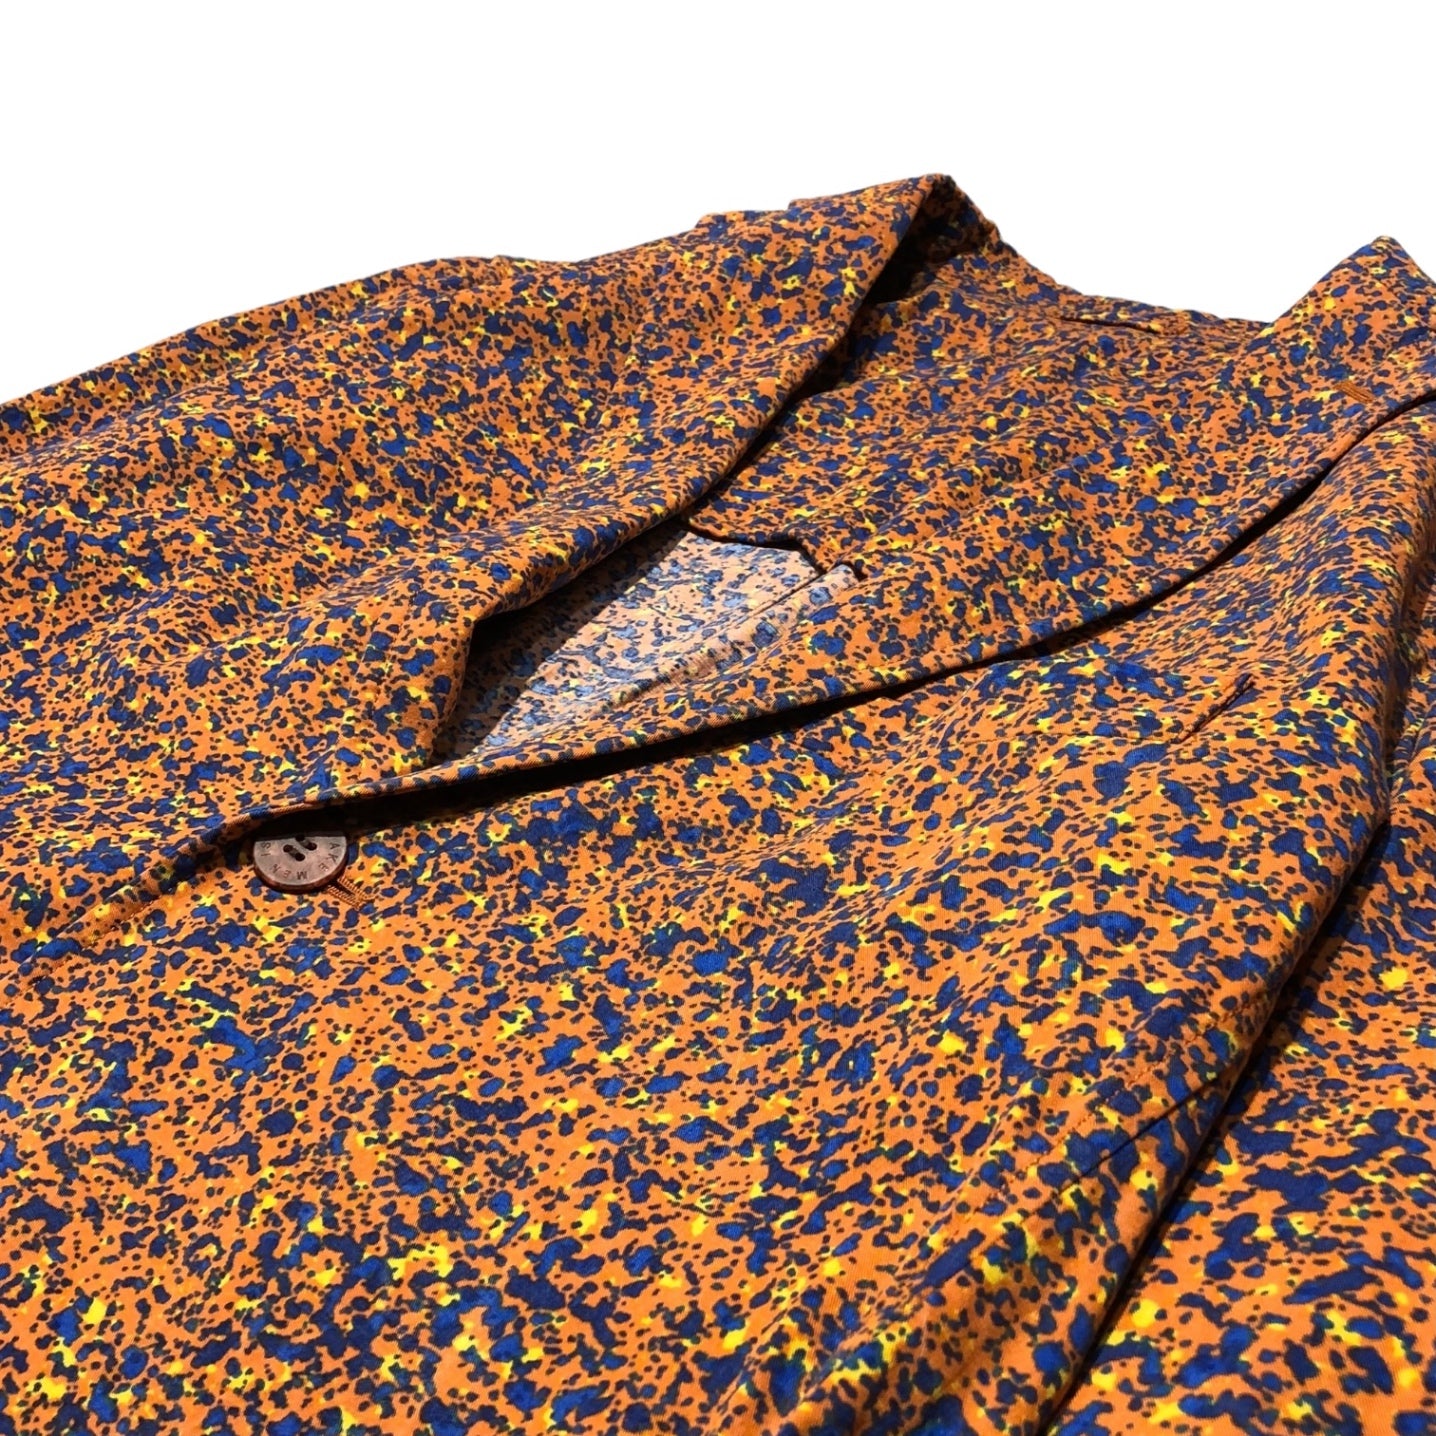 ISSEY MIYAKE MEN(イッセイミヤケメン) 16AW Marble print jacket setup マーブルプリントジャケットセットアップ ME63FD200 ME63FF201 TOP:4(XL) BOTTOM:3(L) オレンジ×ブルー コレクションランウェイ着用品 稀少品